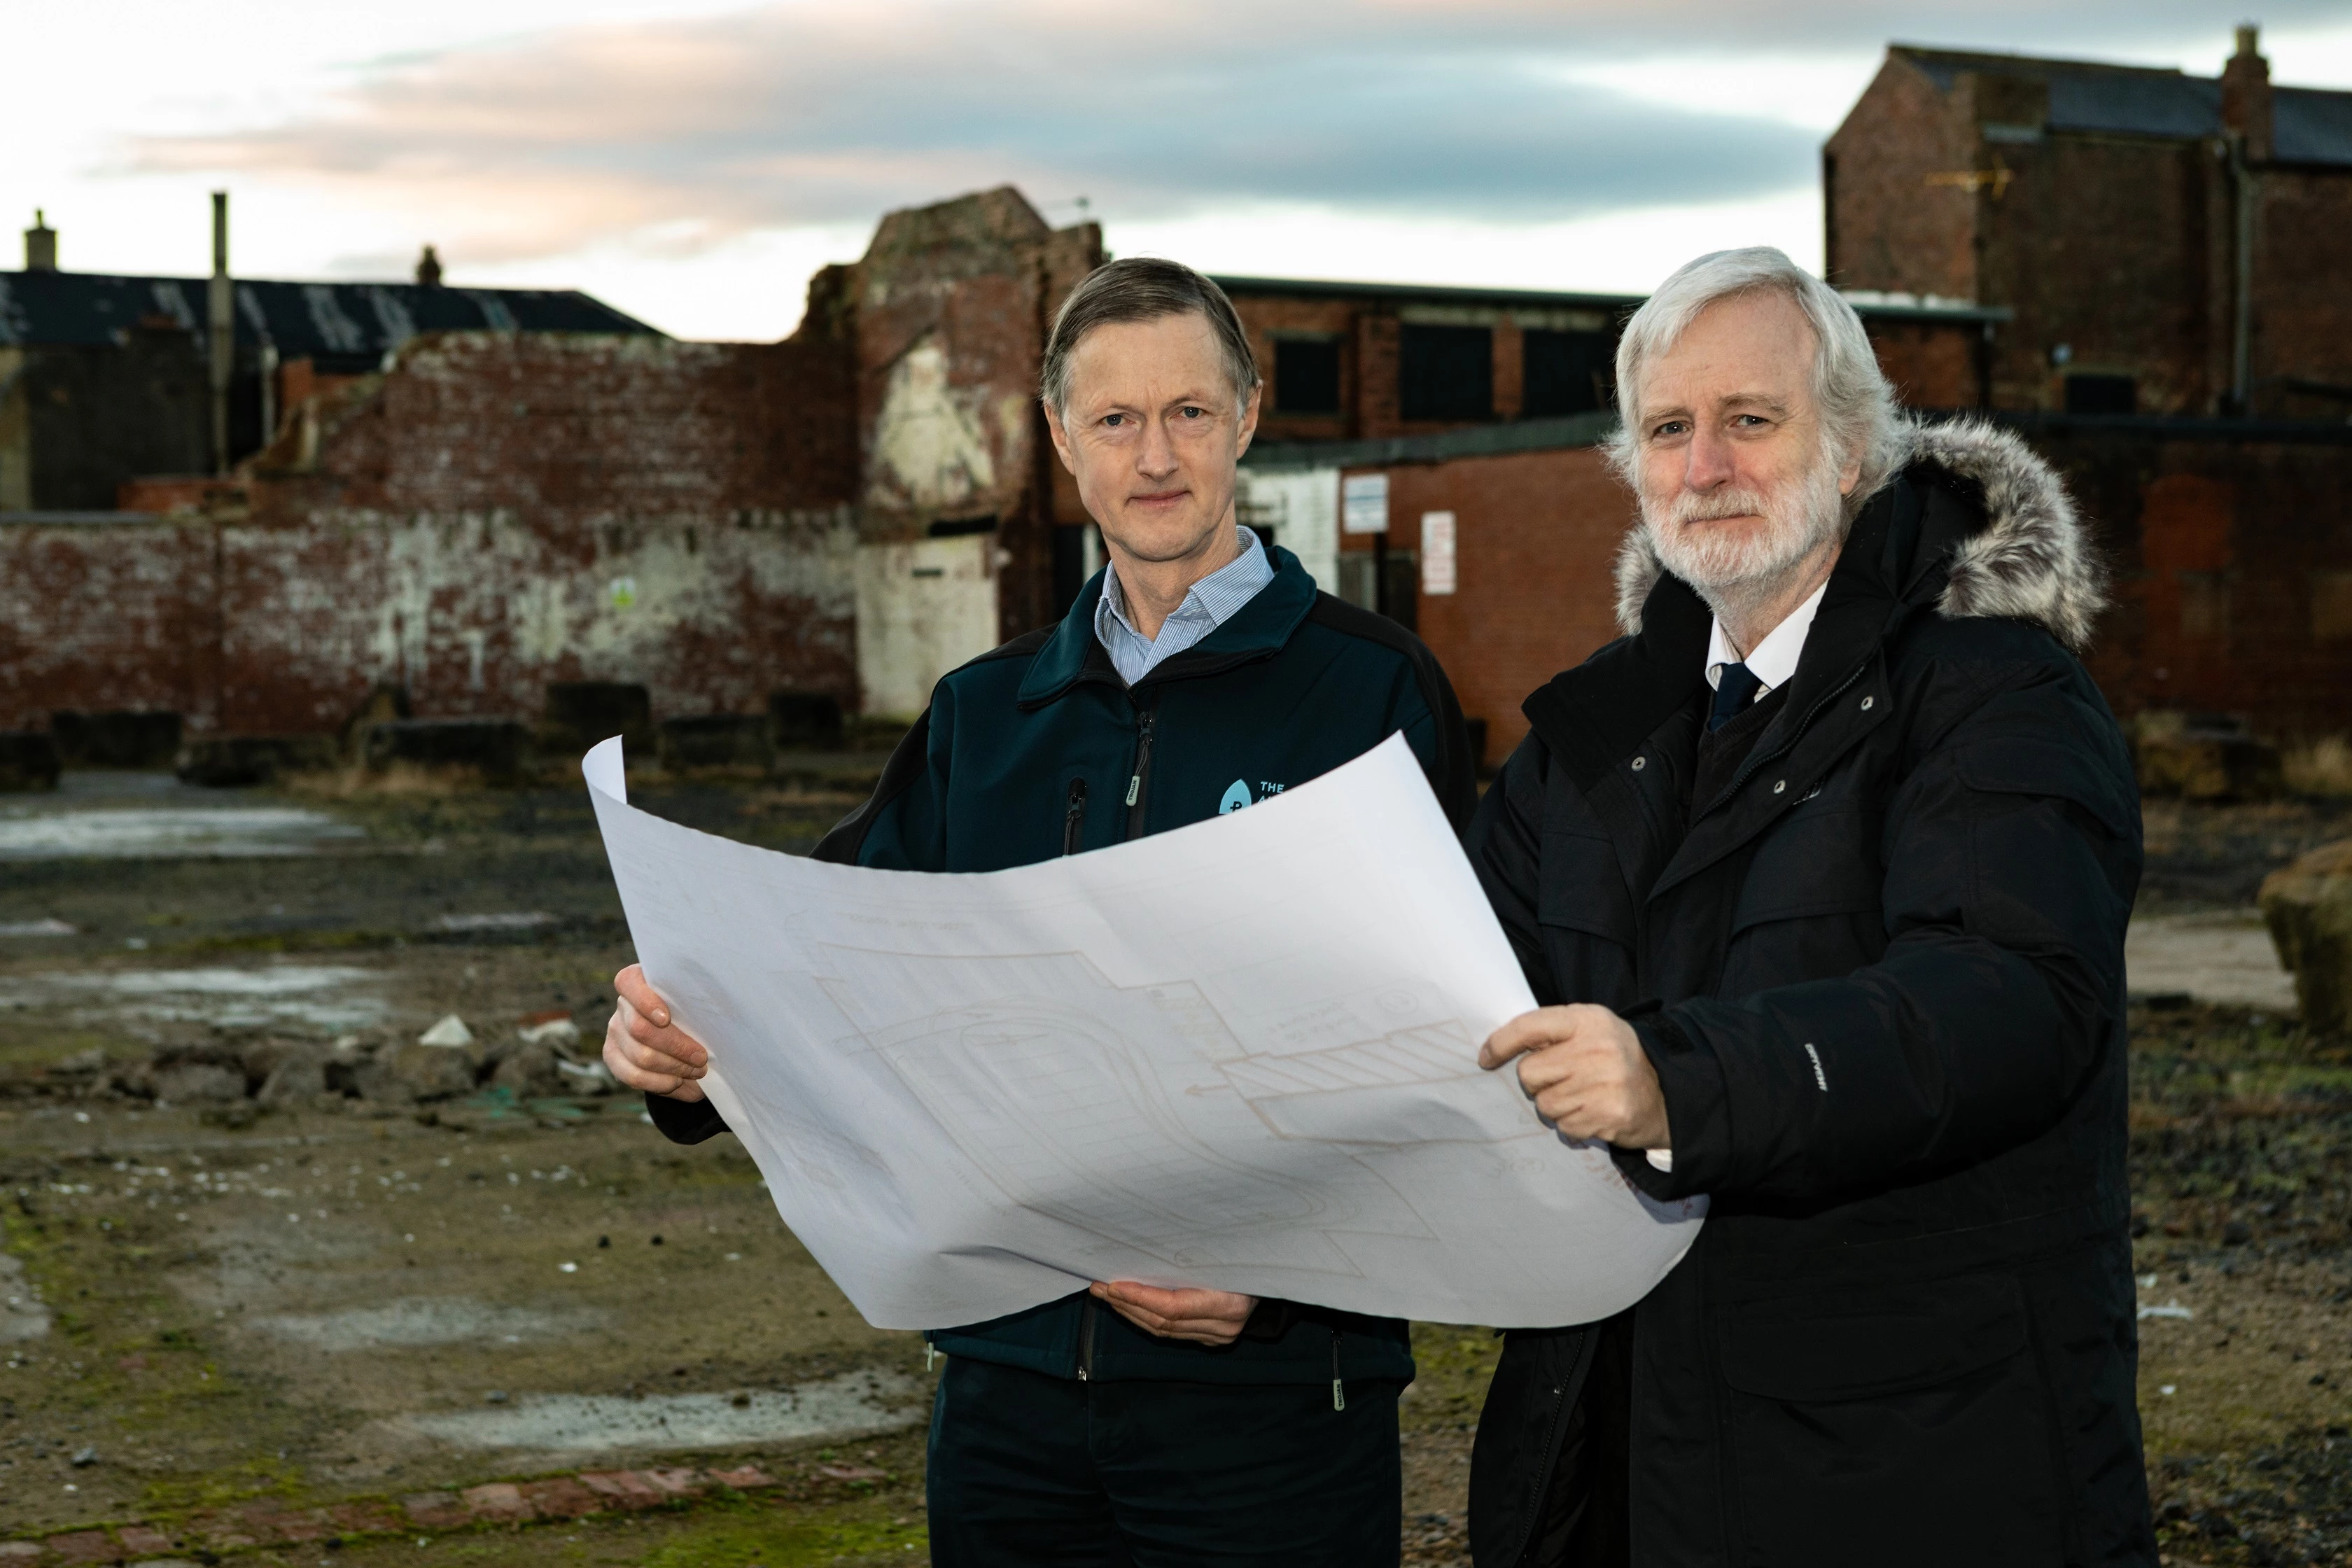 David Maddan and Councillor Clare at the site of the future car park